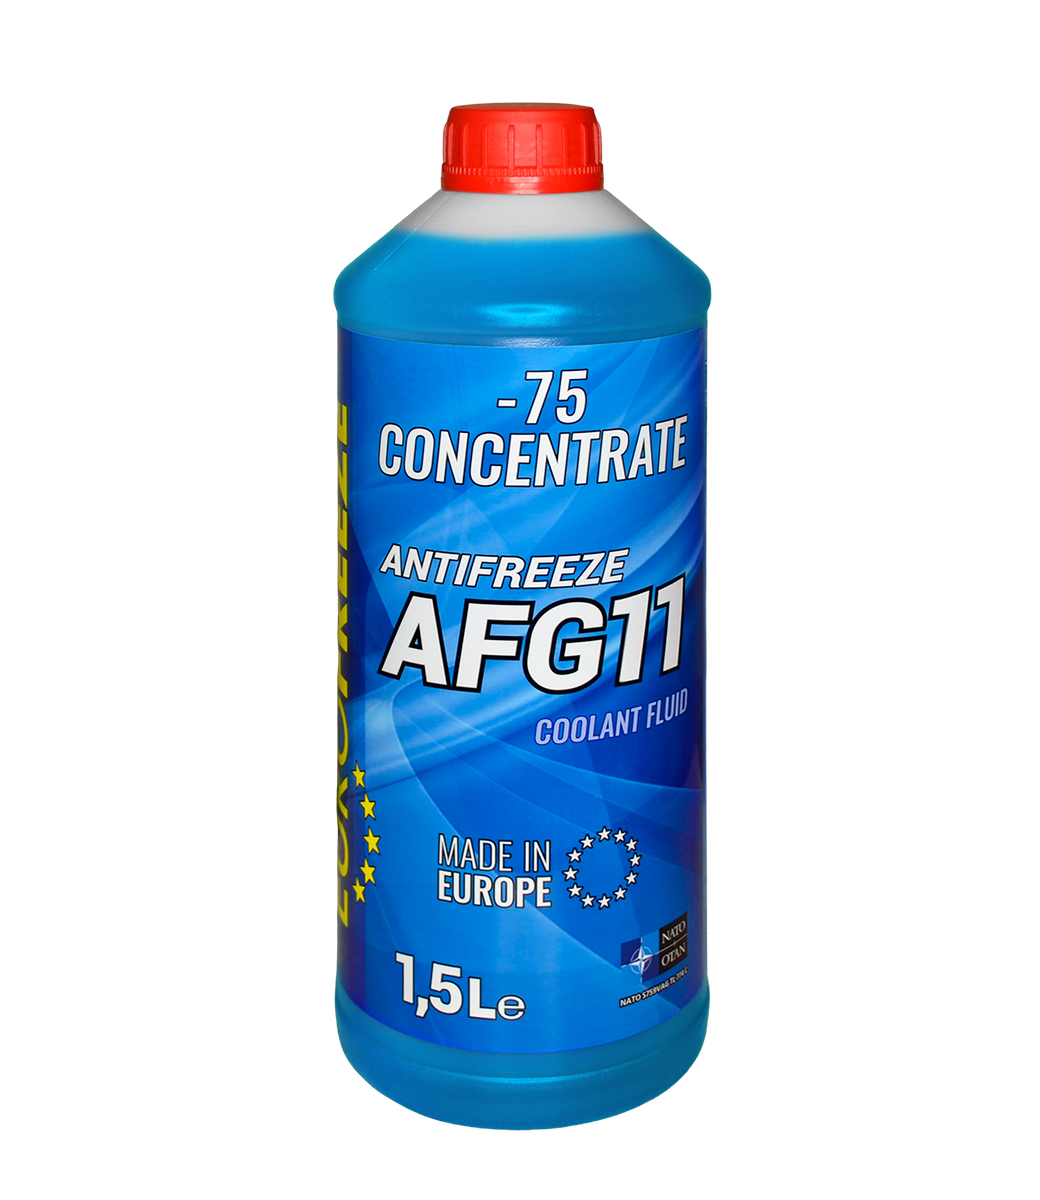 Eurofreeze Antifreeze AFG 11 - Concentrate